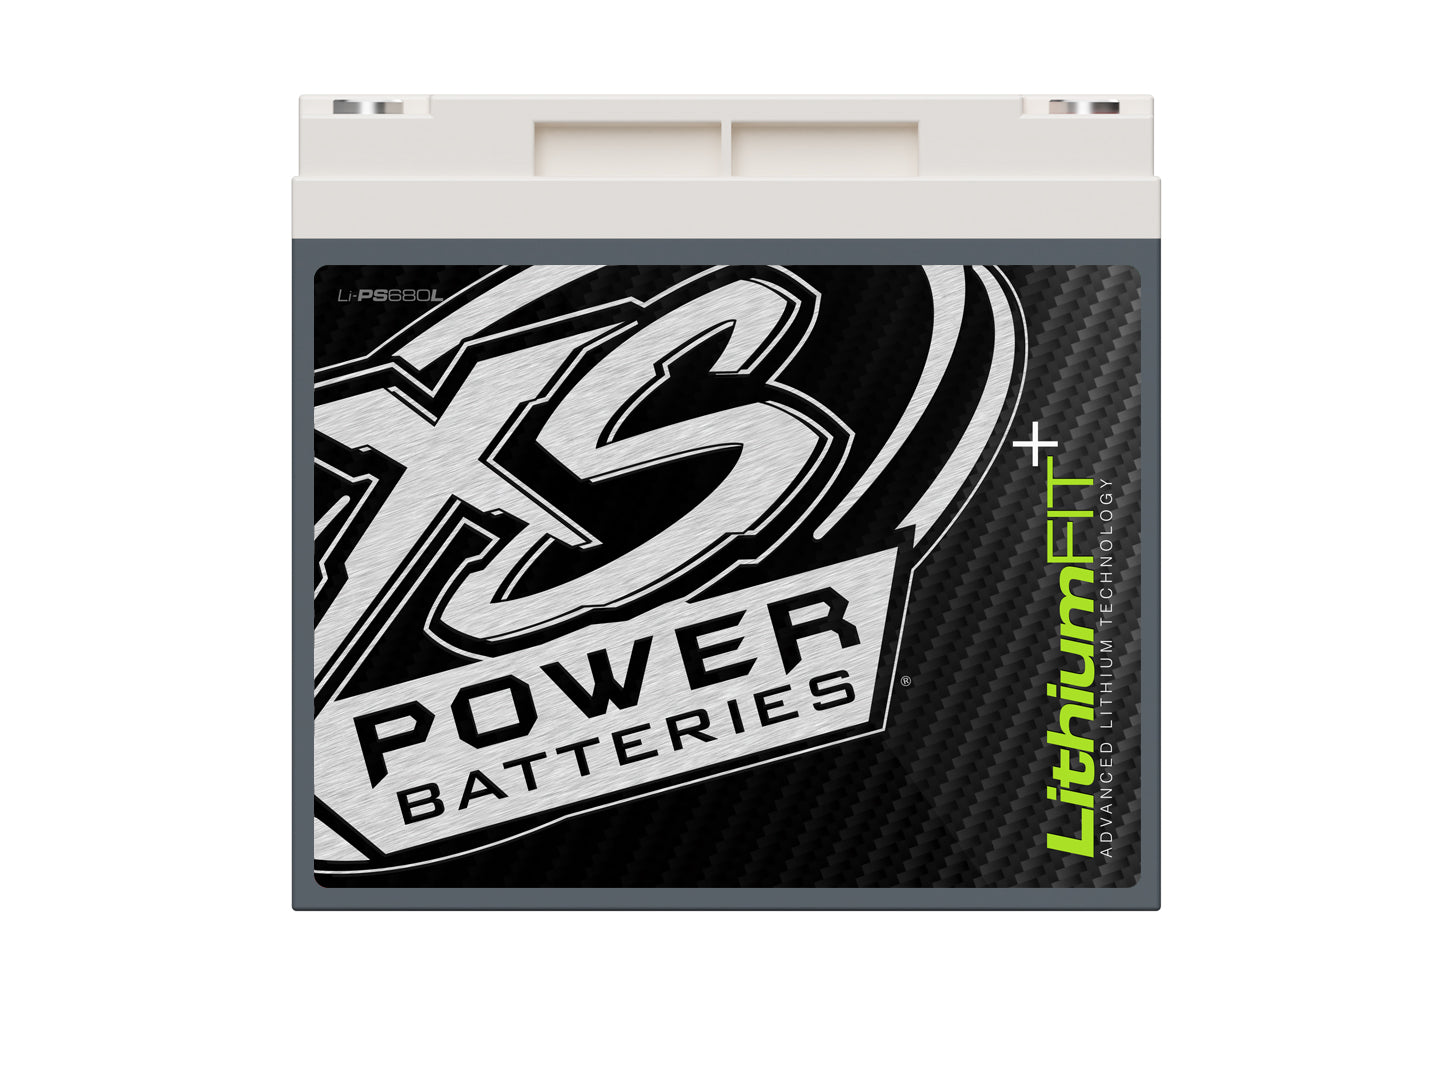 Li-PS680L XS Power 12VDC Lithium Powersports Vehicle Battery 300A 16.5Ah